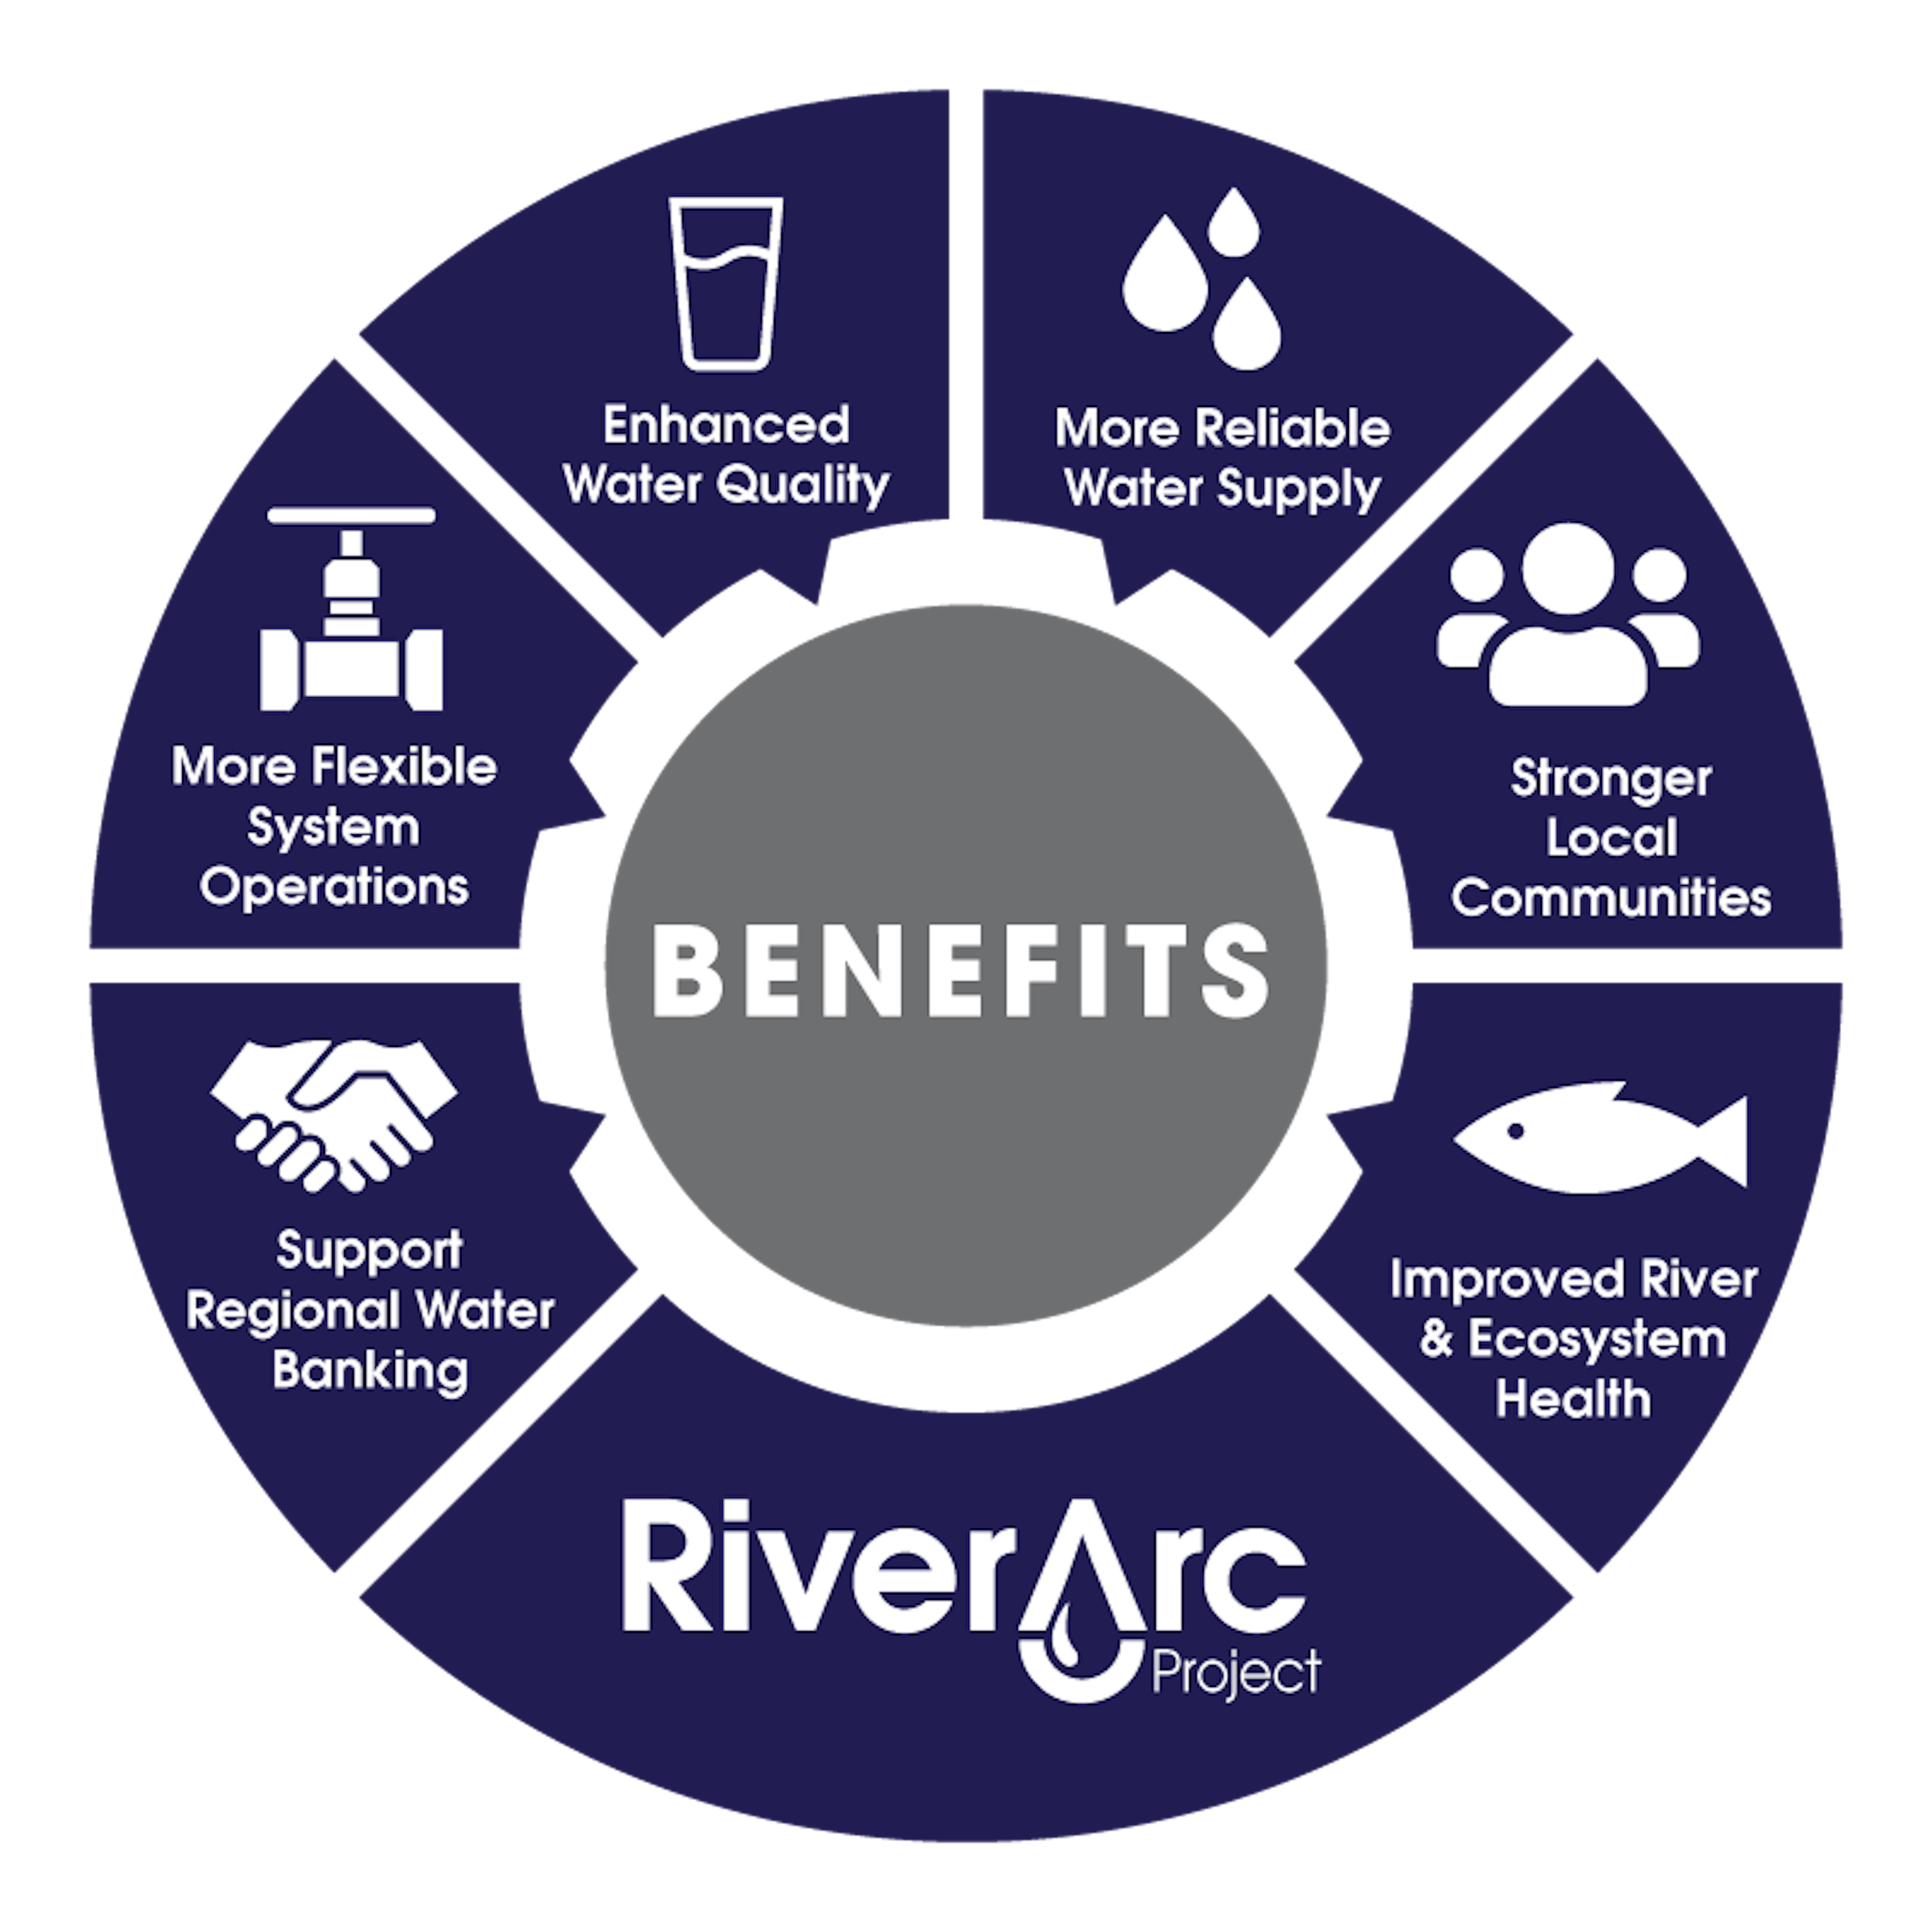 RiverArc Benefits Infographic